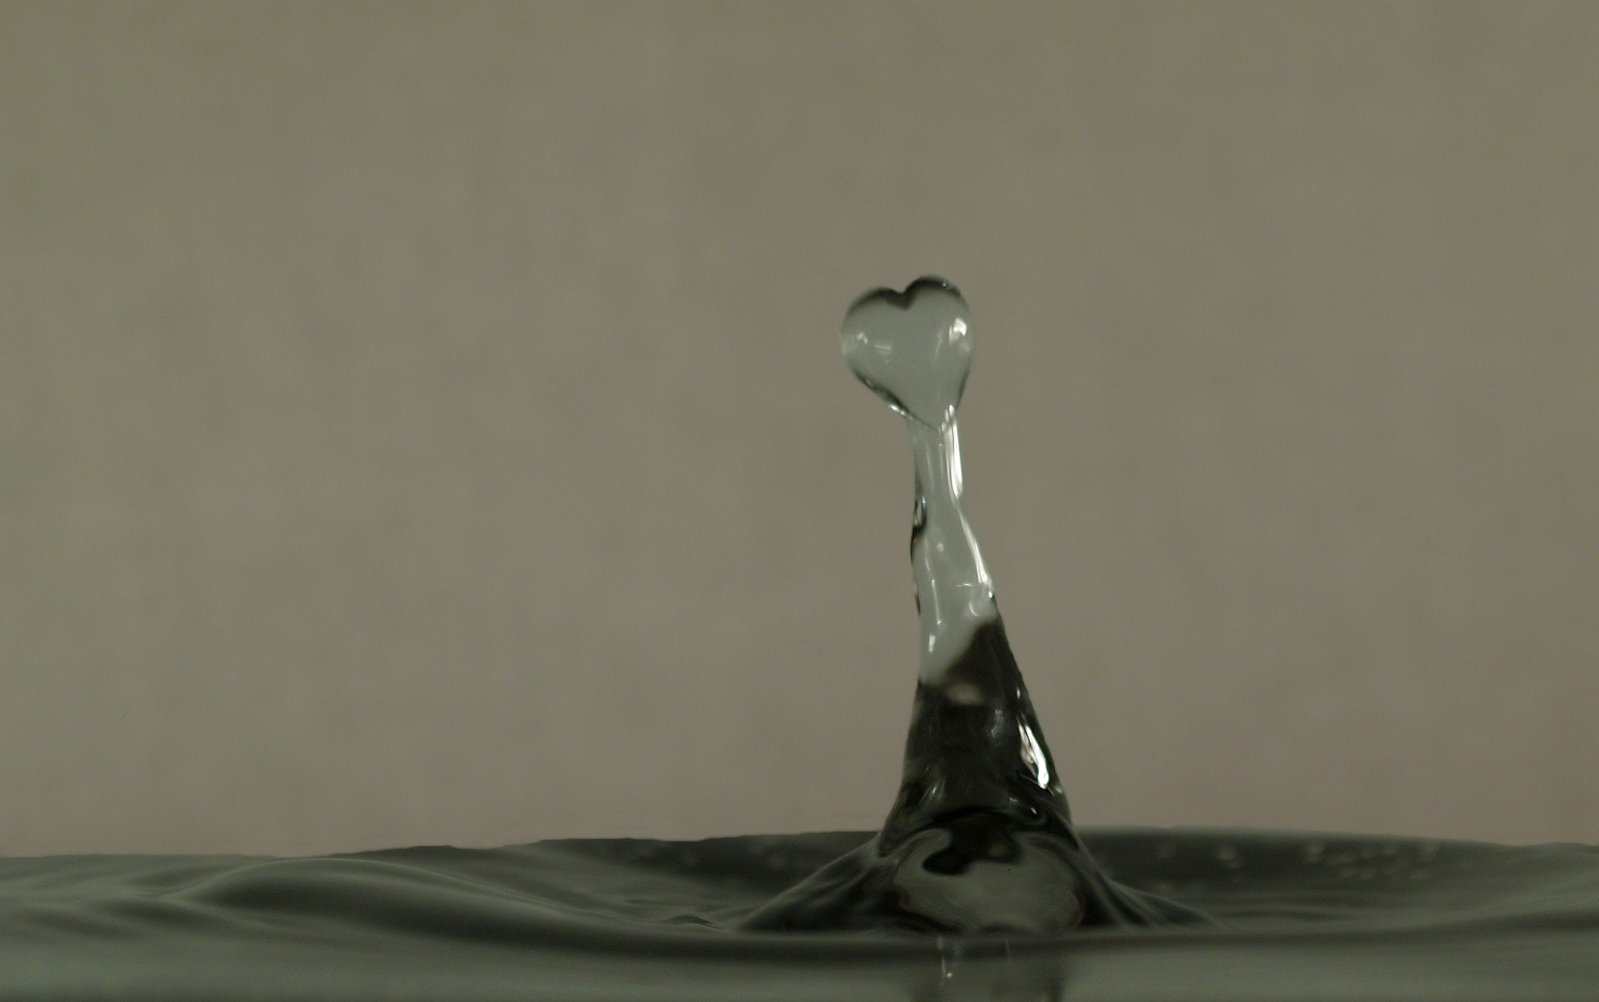 water splashing from a spoon into a dark liquid